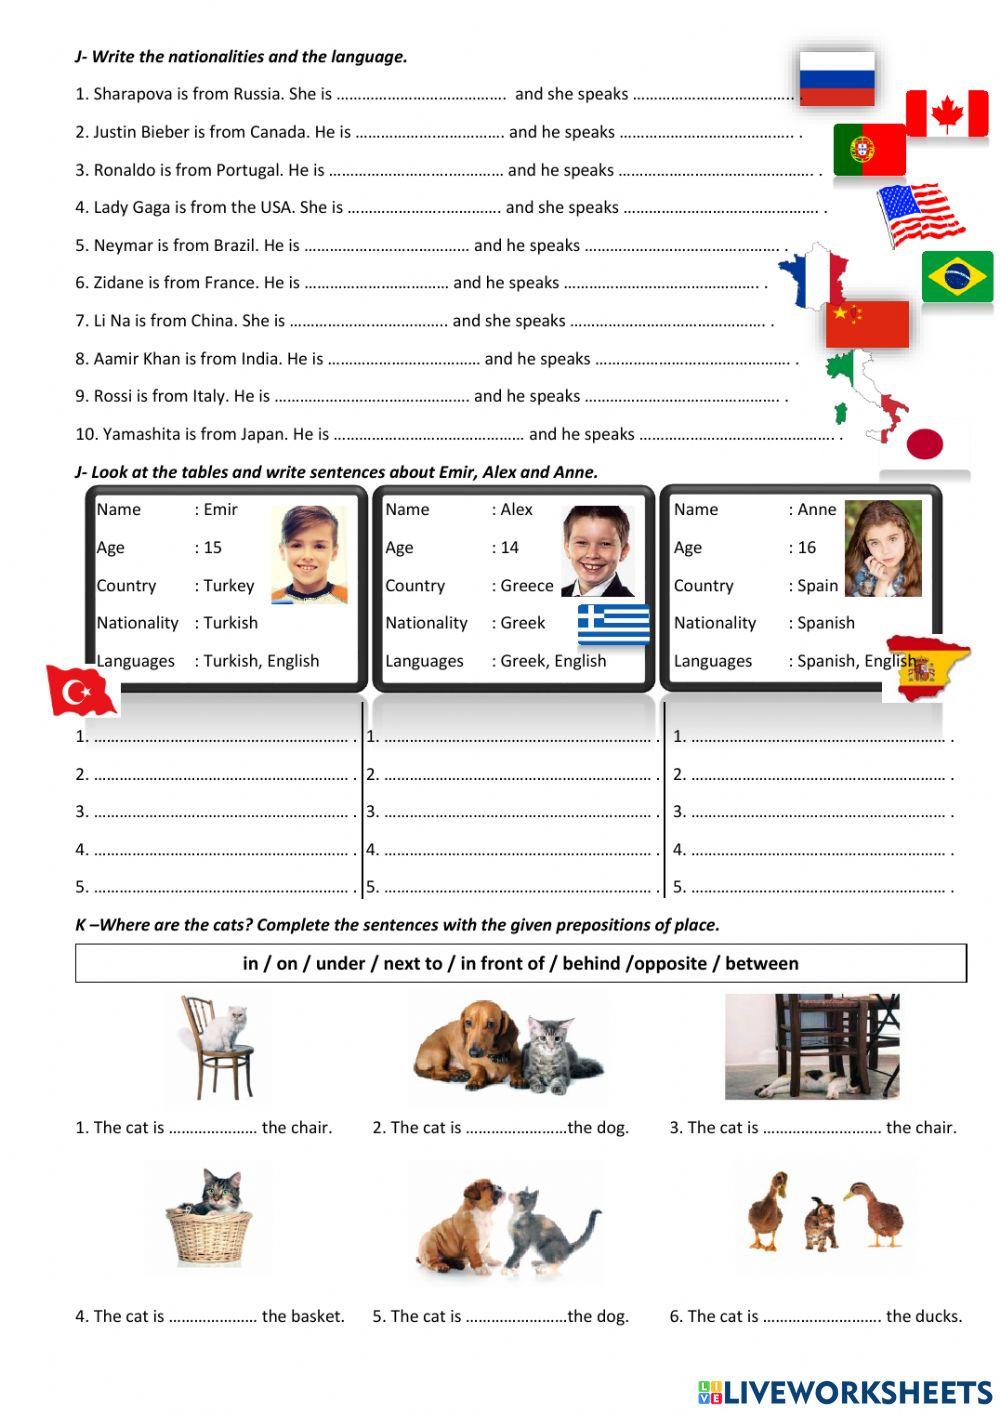 5th Grade - 1st Term 1 Exam - Preparation Sheet